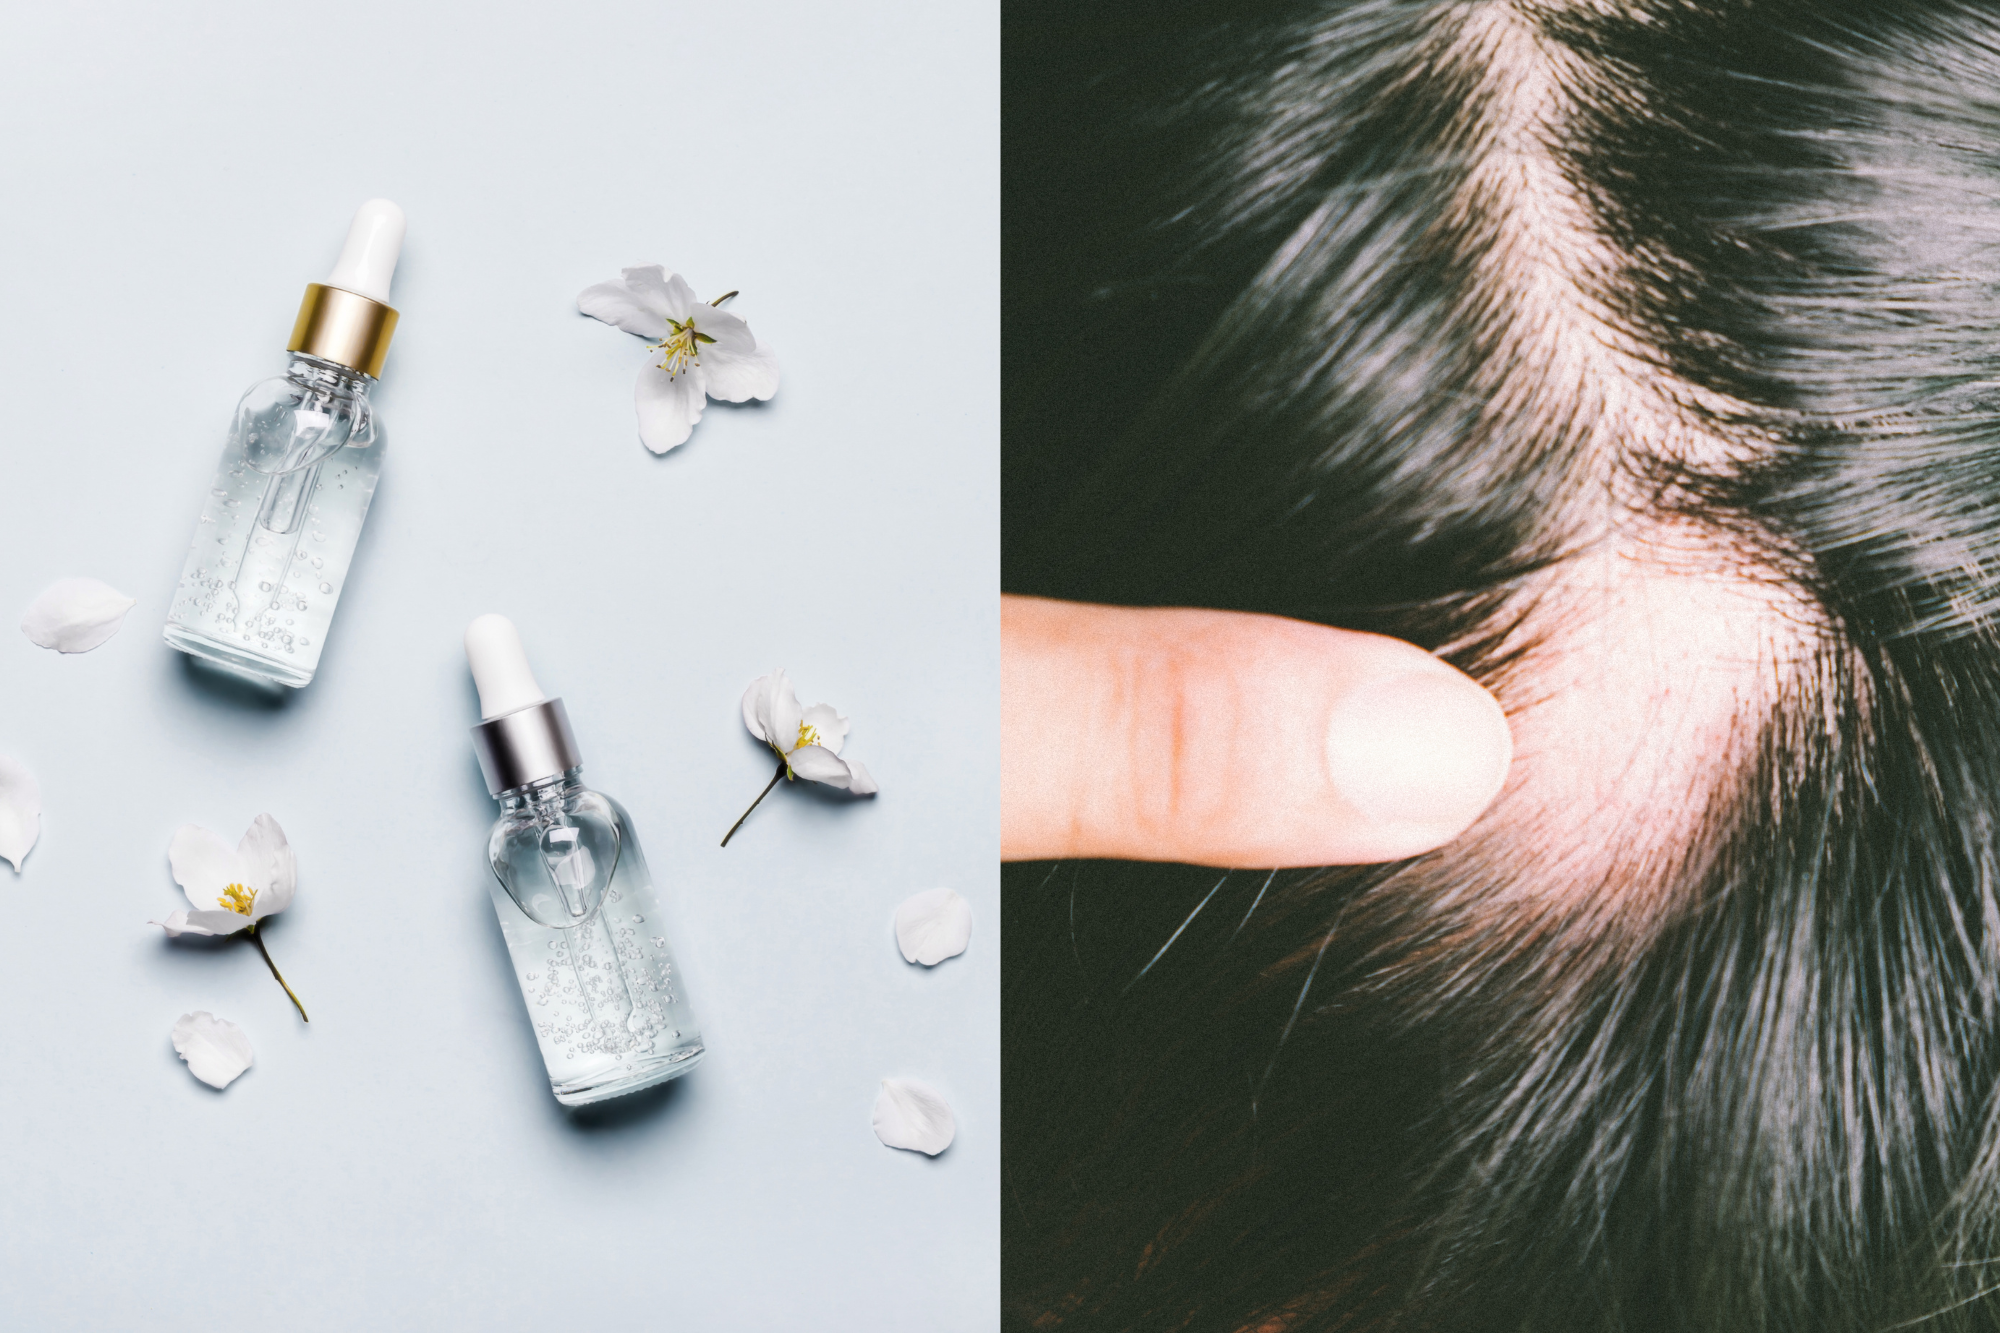 Eksisterer ~ side Pelagic Can Retinol Cause Hair Loss? – Revela